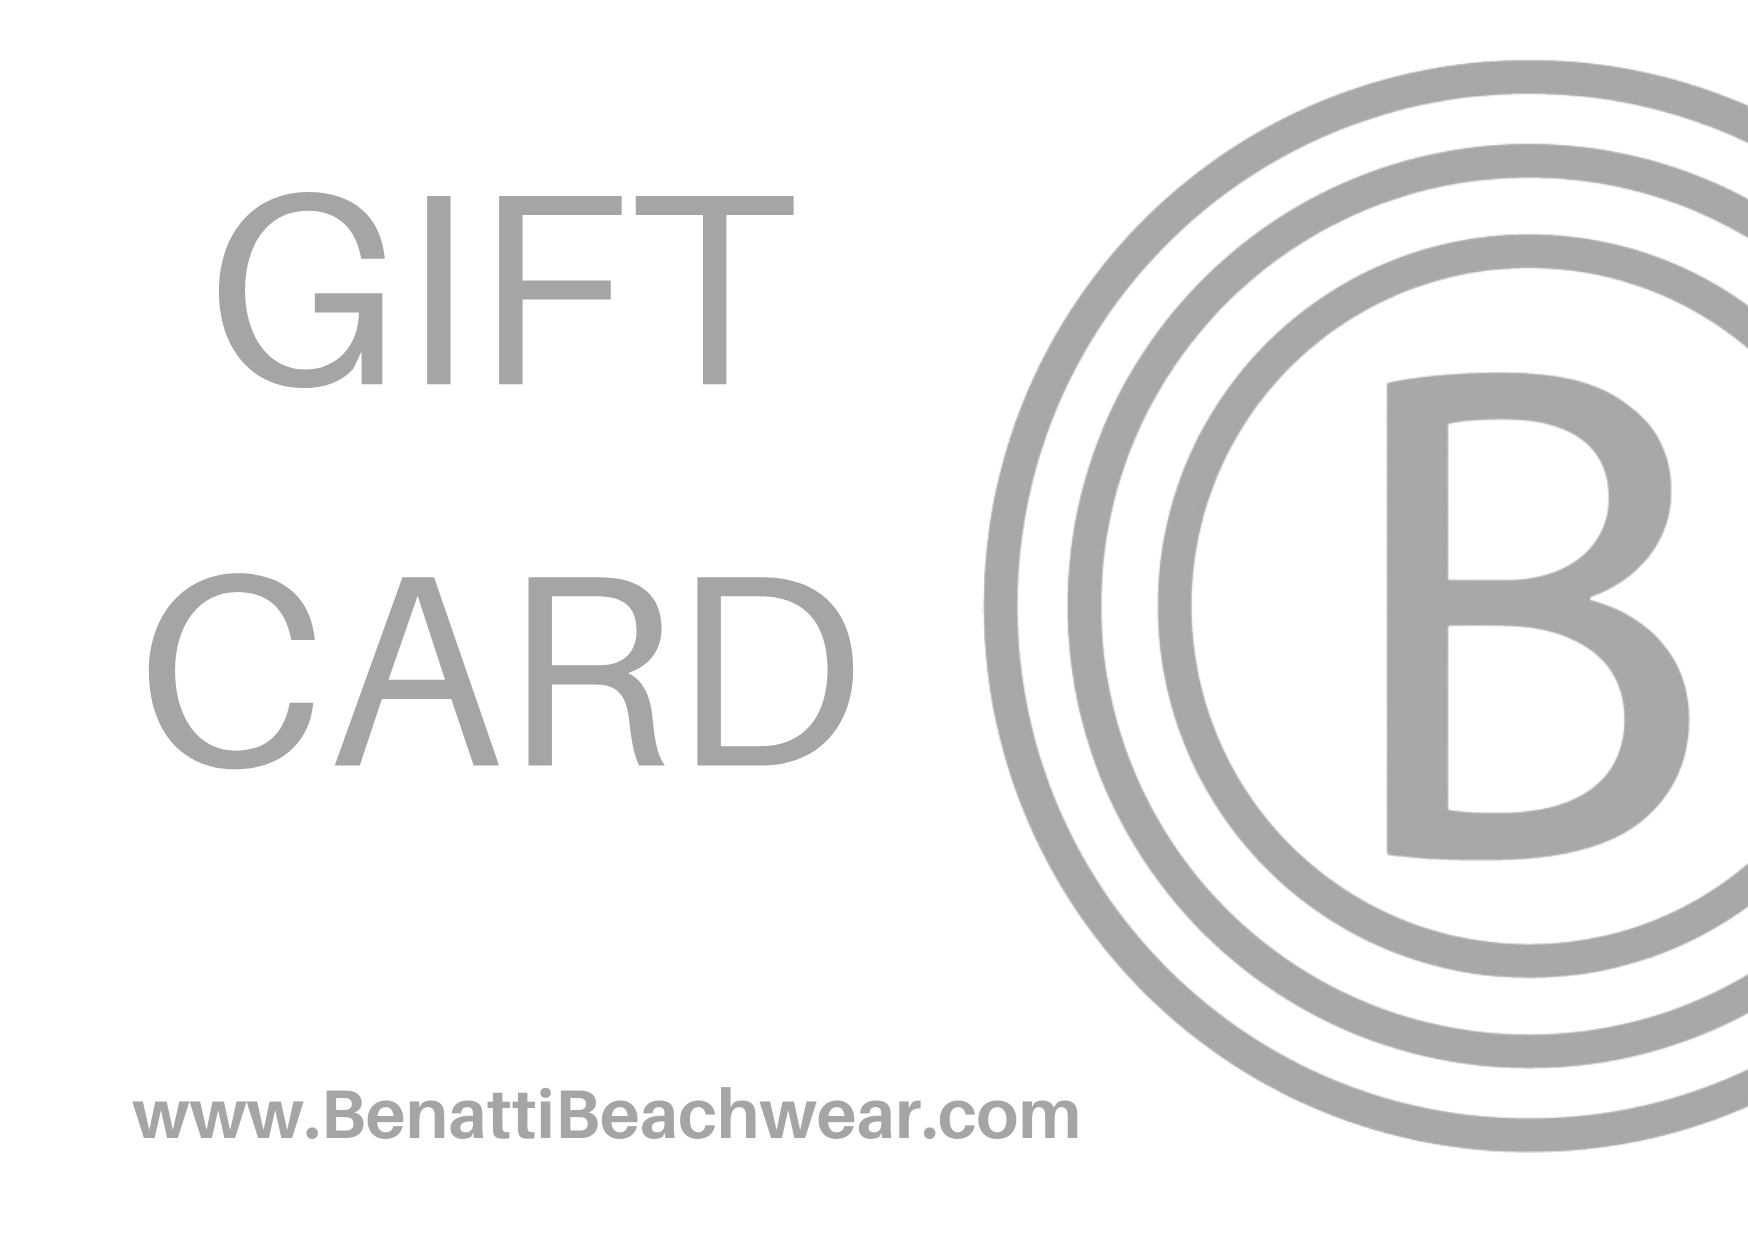 Benatti Beachwear Gift Card